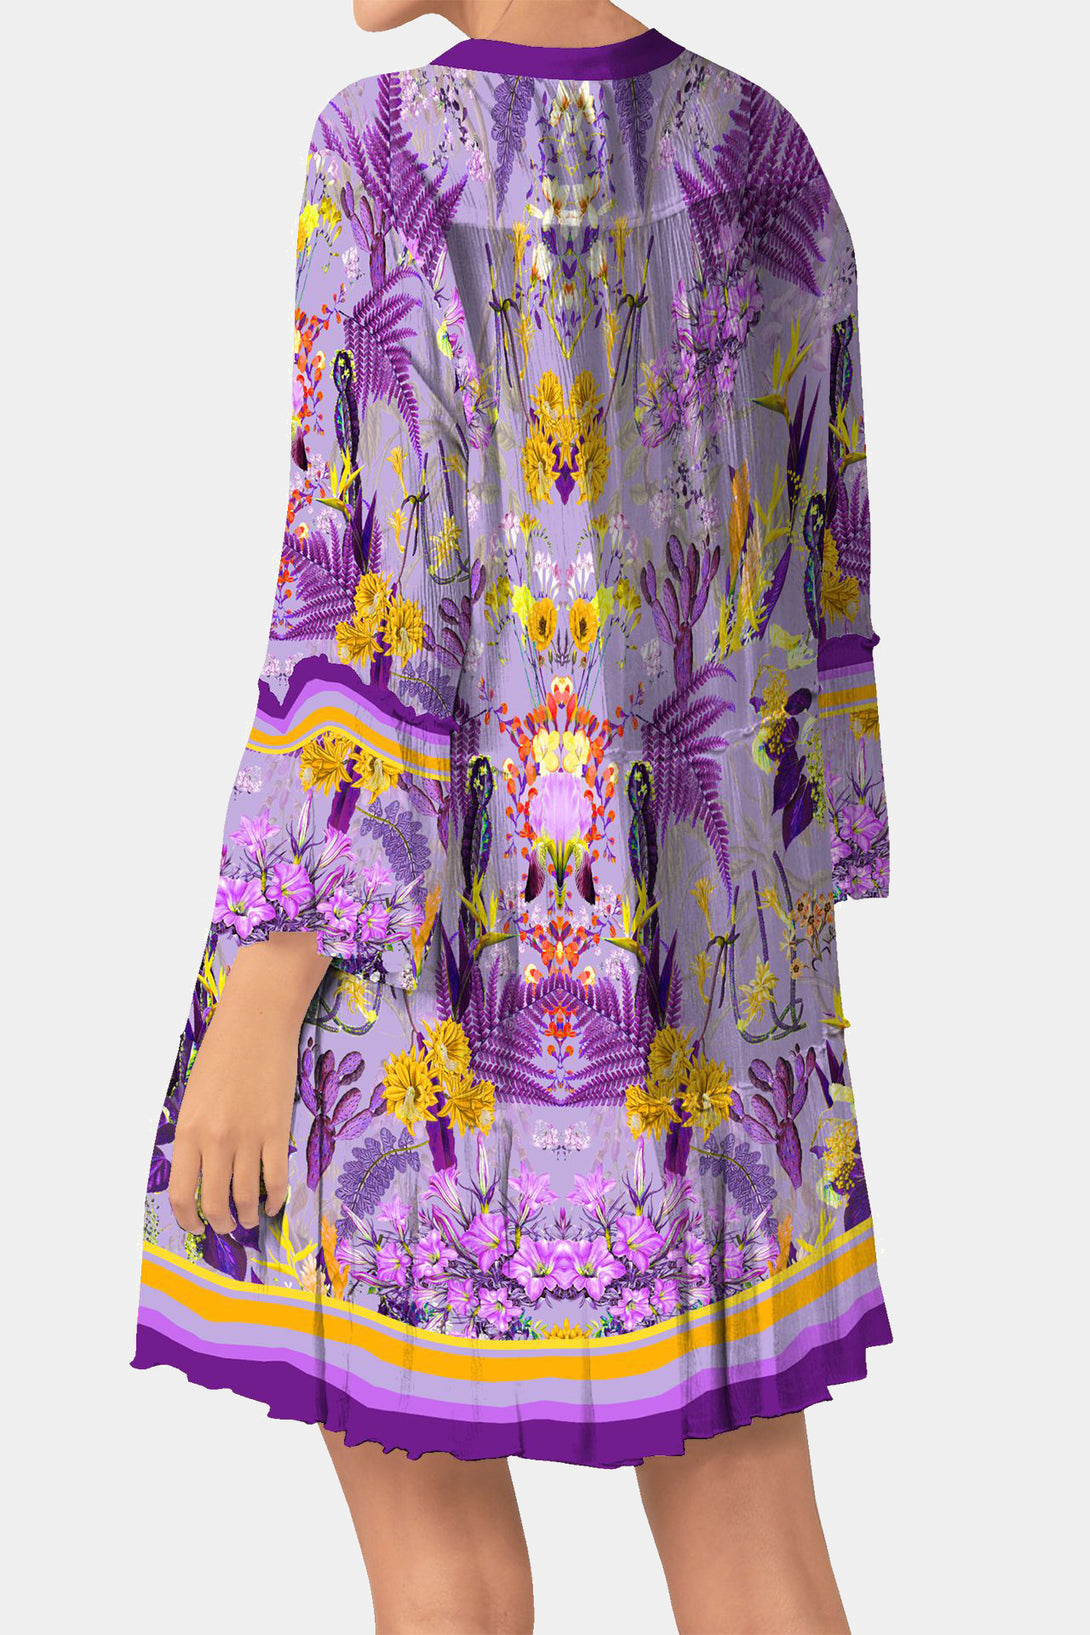  min lilac dress, short sleeve summer dresses,Shahida Parides, mini frock for women,